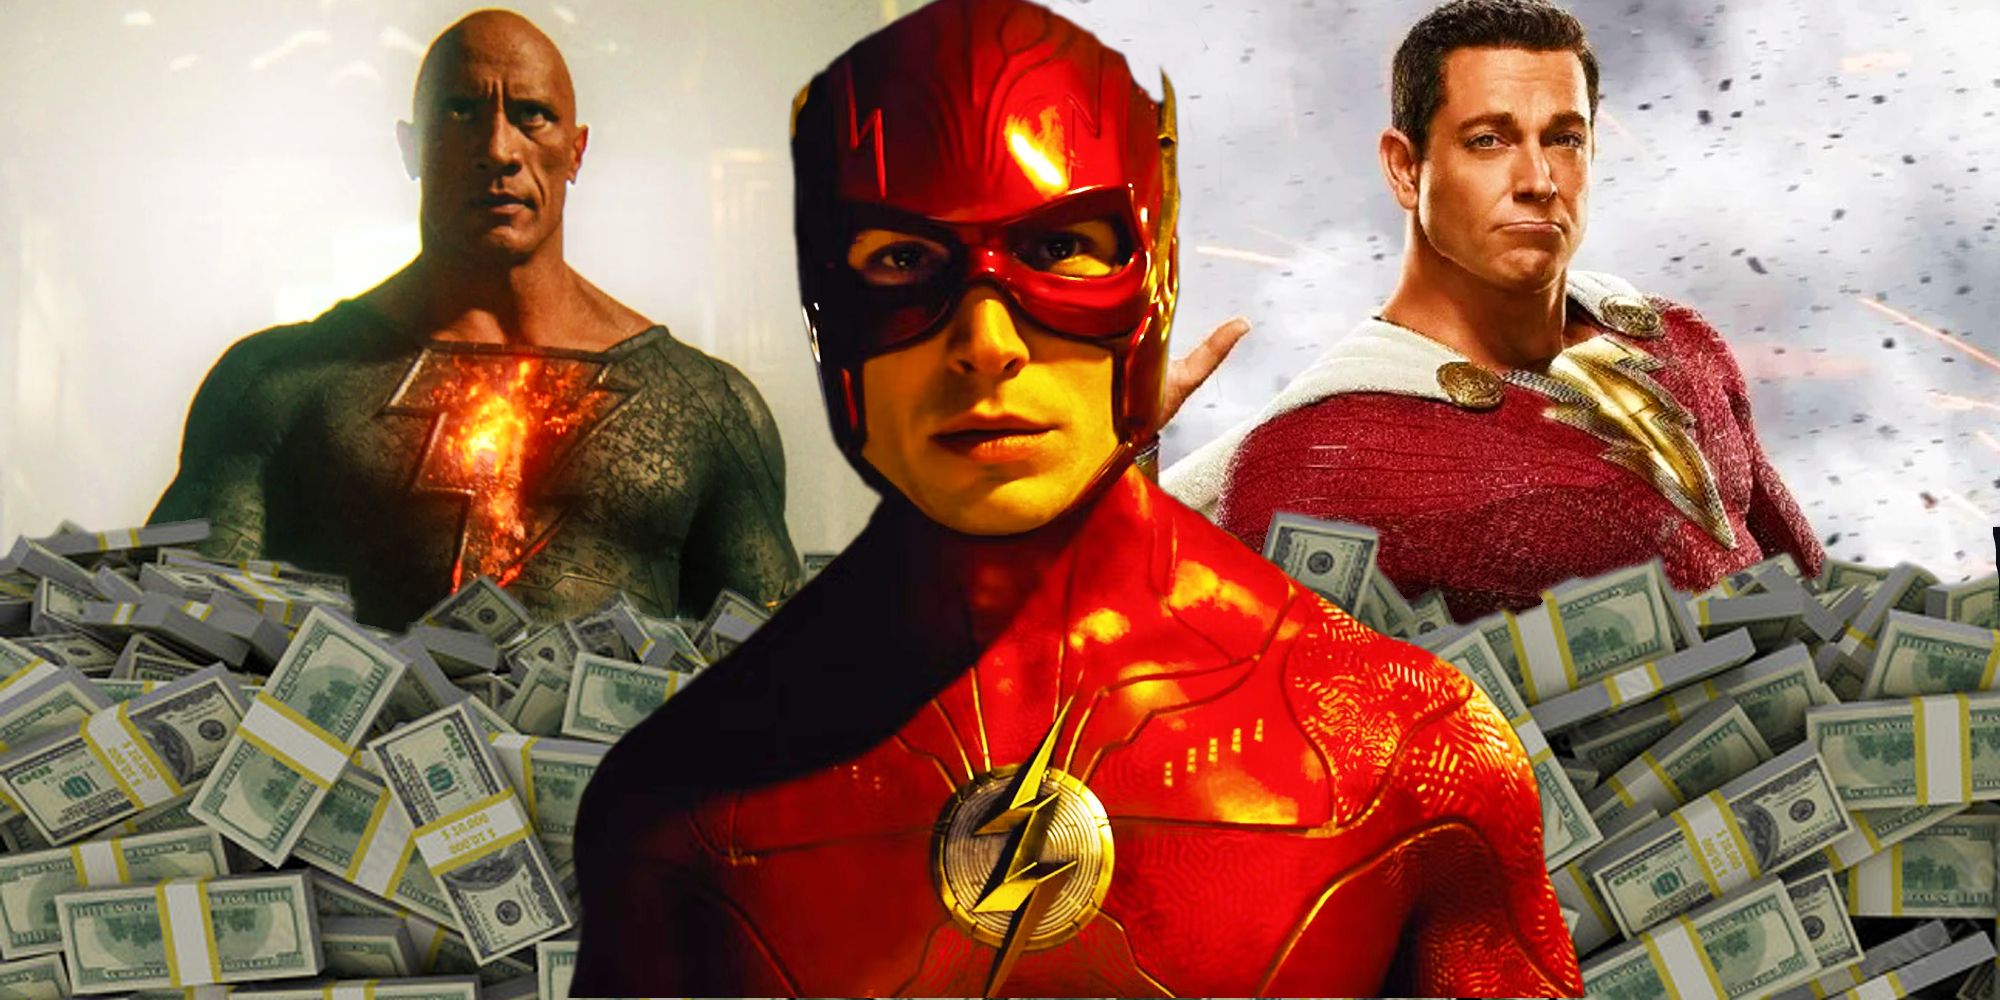 The Flash, Shazam, and Black Adam surrounding by dollar bills